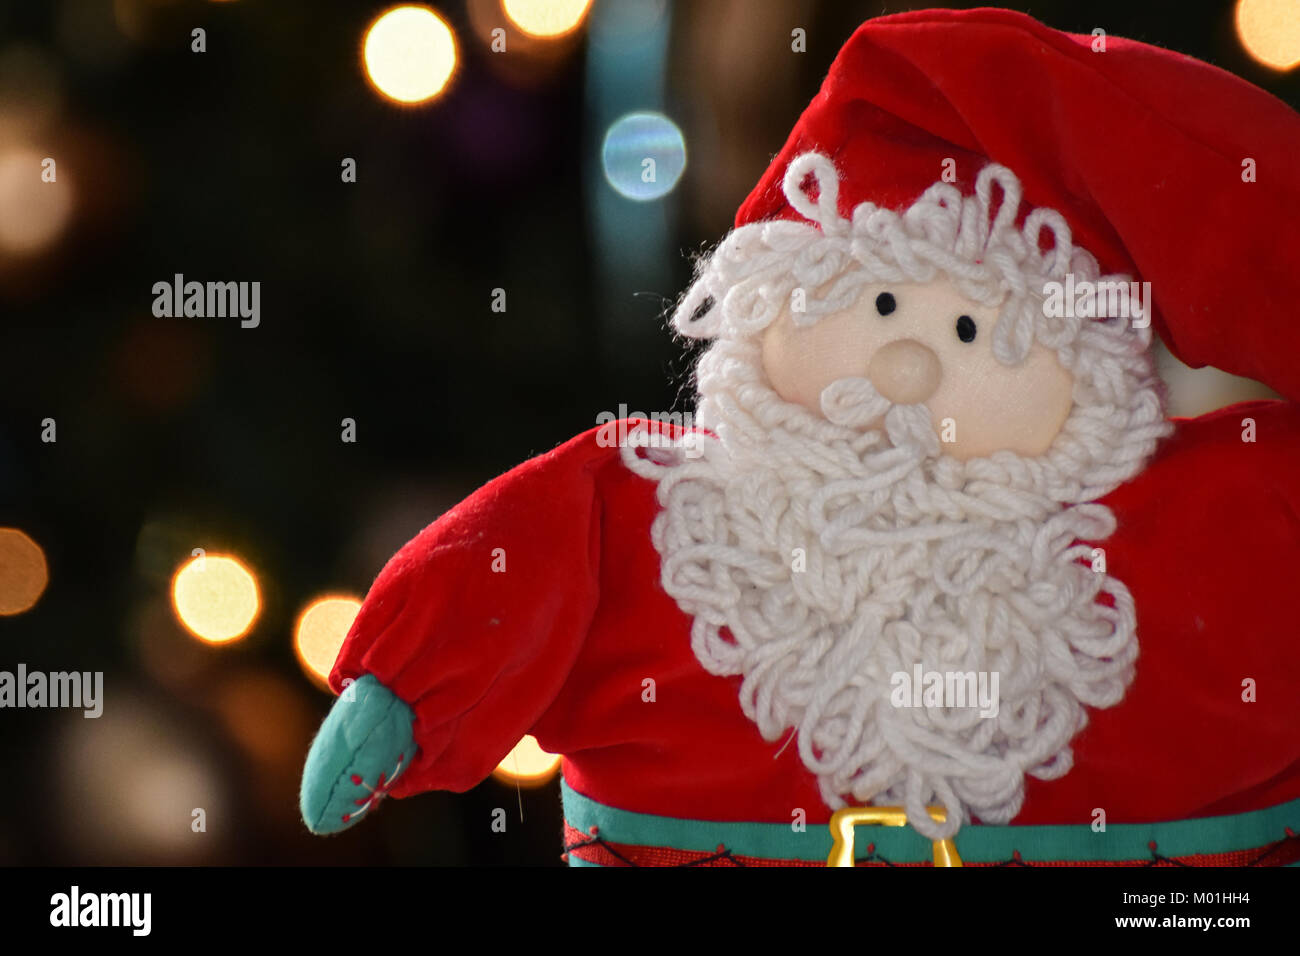 Santa christmas decoration with bokeh background Stock Photo